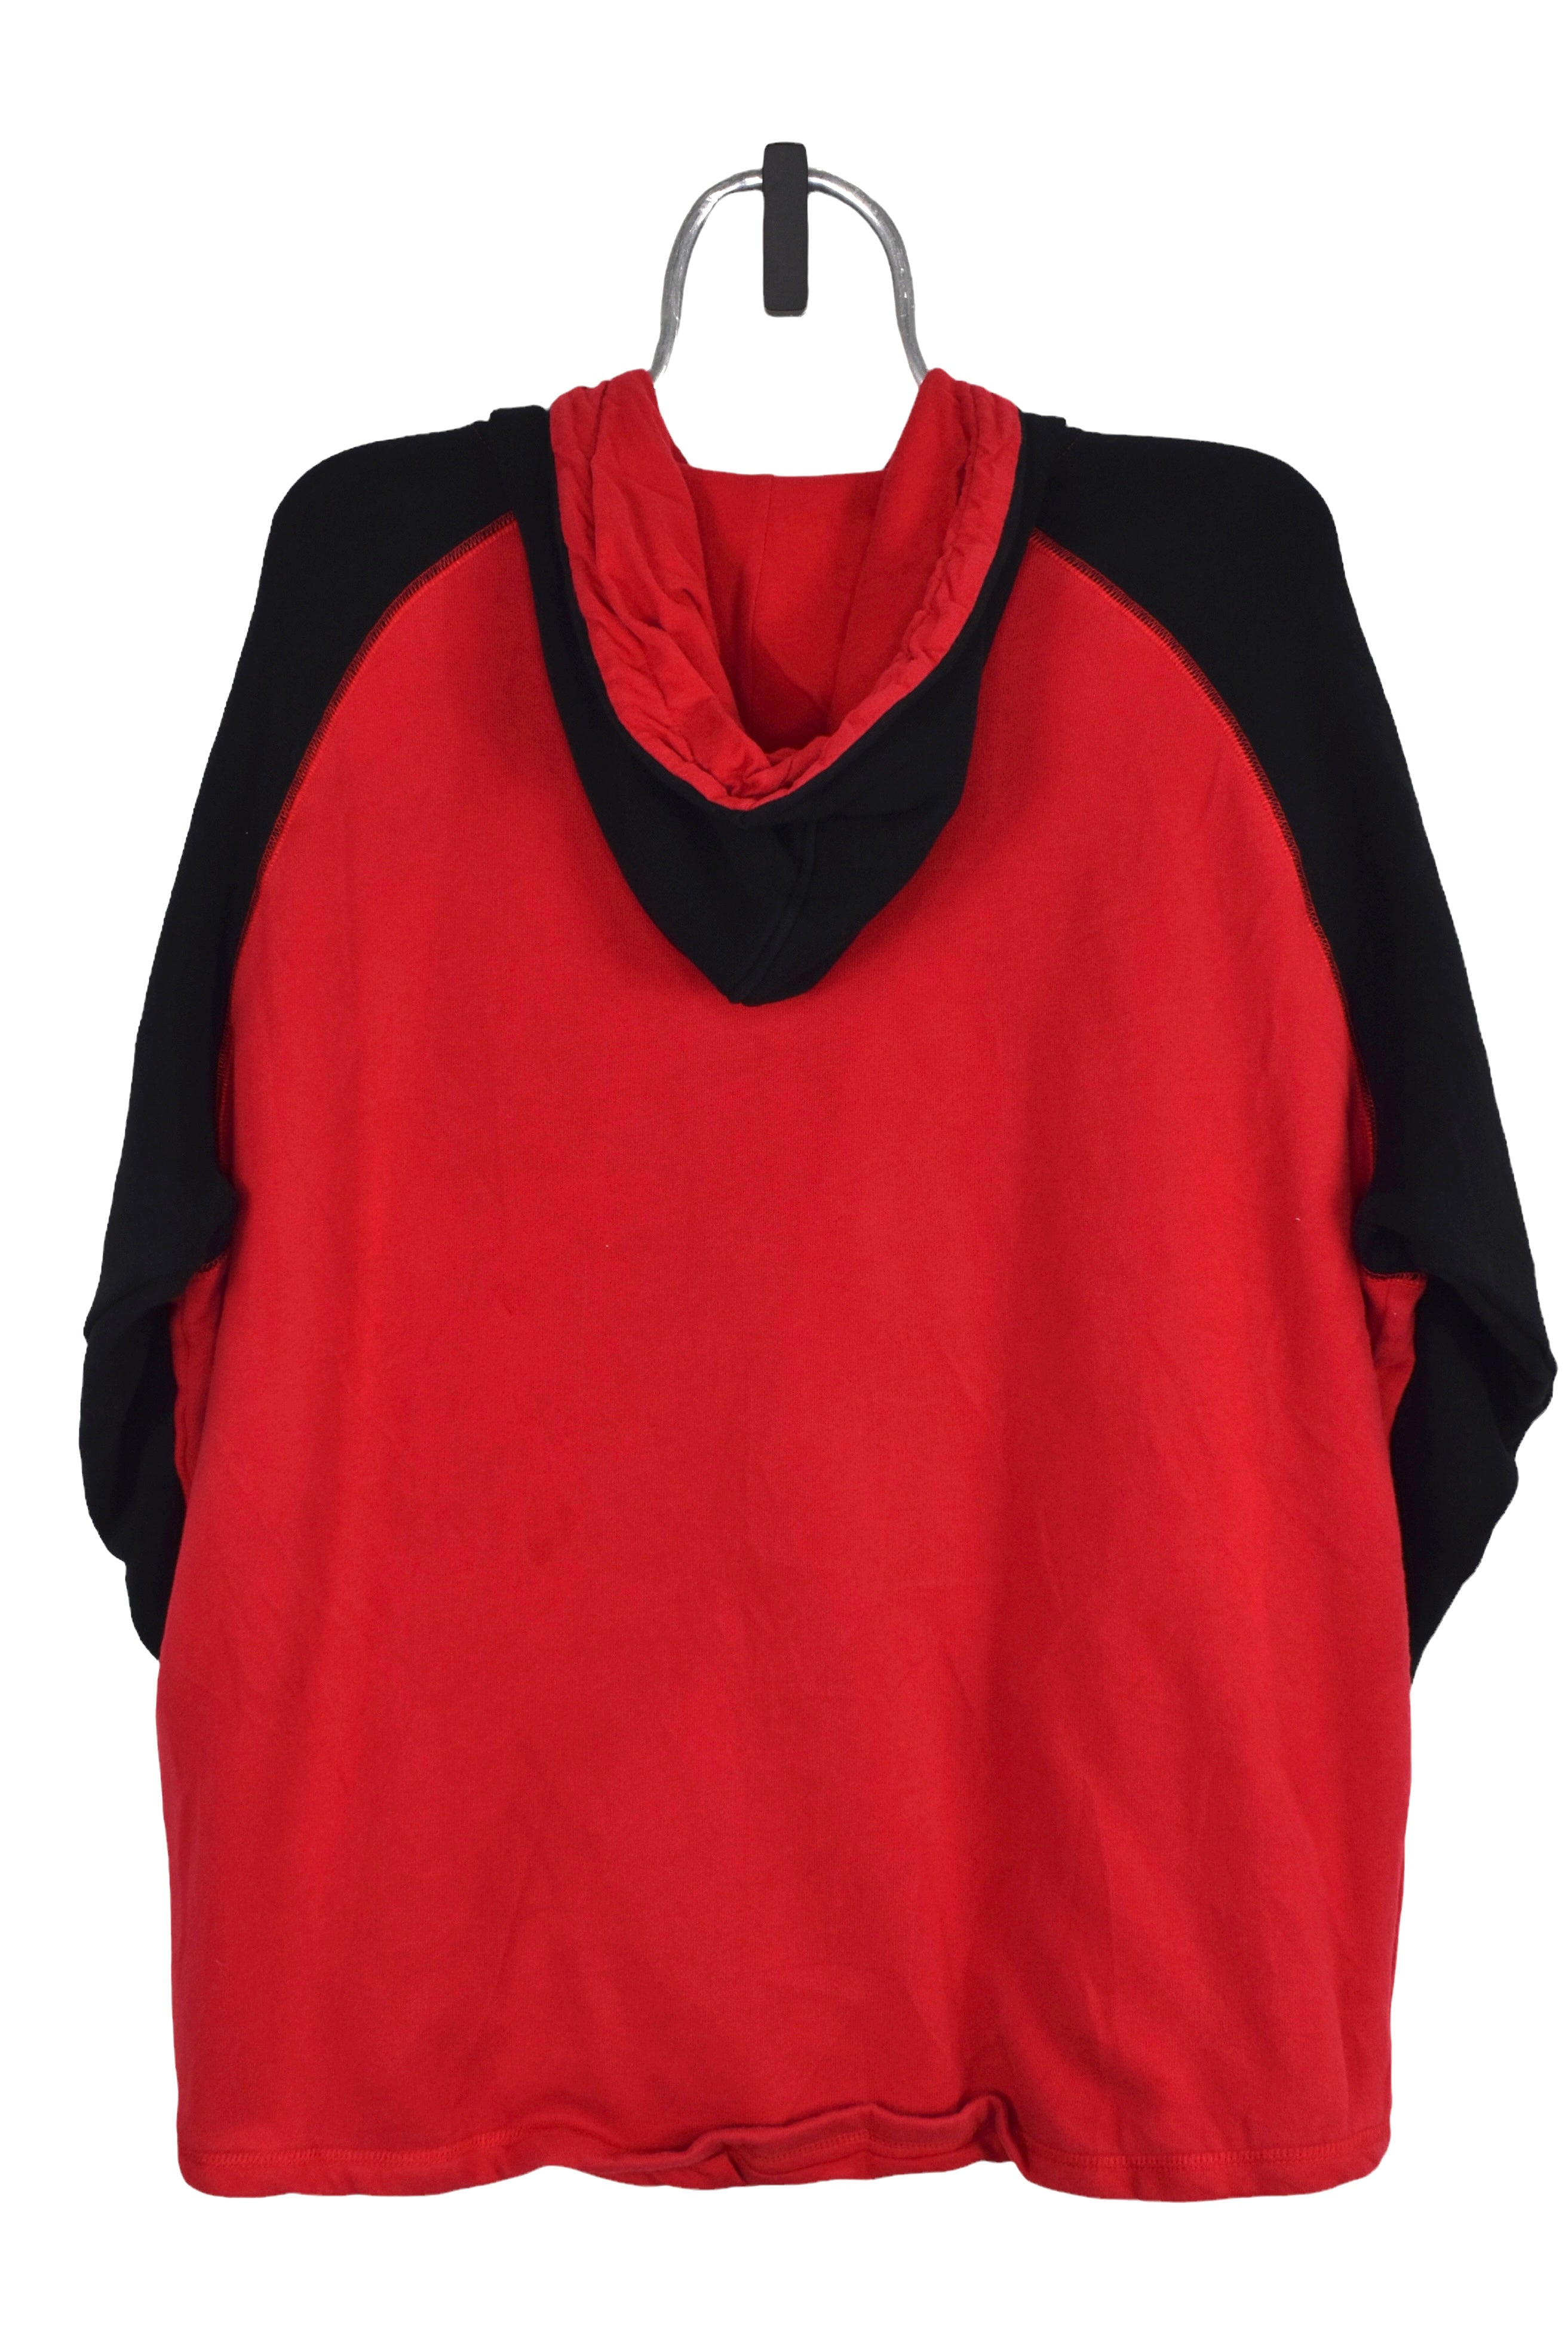 Vintage Nascar jacket (XL), M&M red embroidered sweatshirt